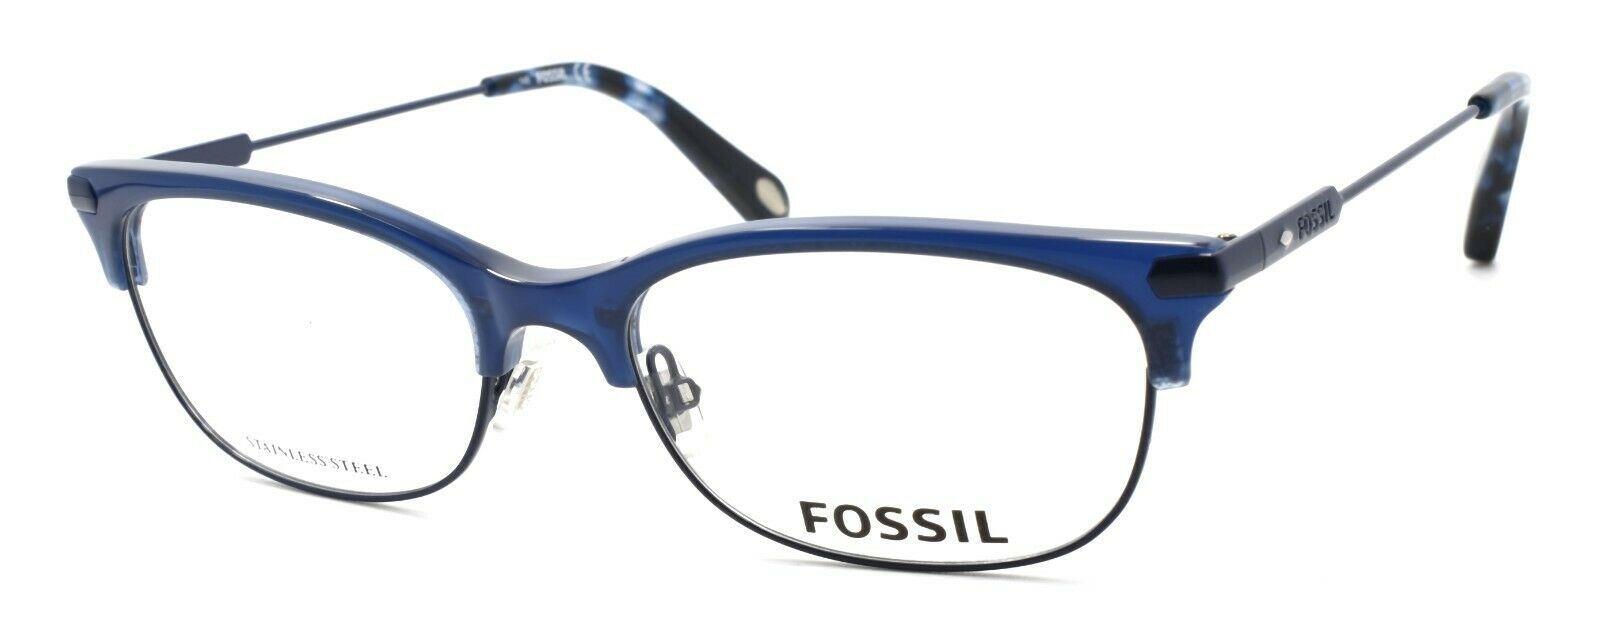 1-Fossil FOS 6055 OIO Women's Eyeglasses Frames 52-17-145 Blue + CASE-762753440662-IKSpecs